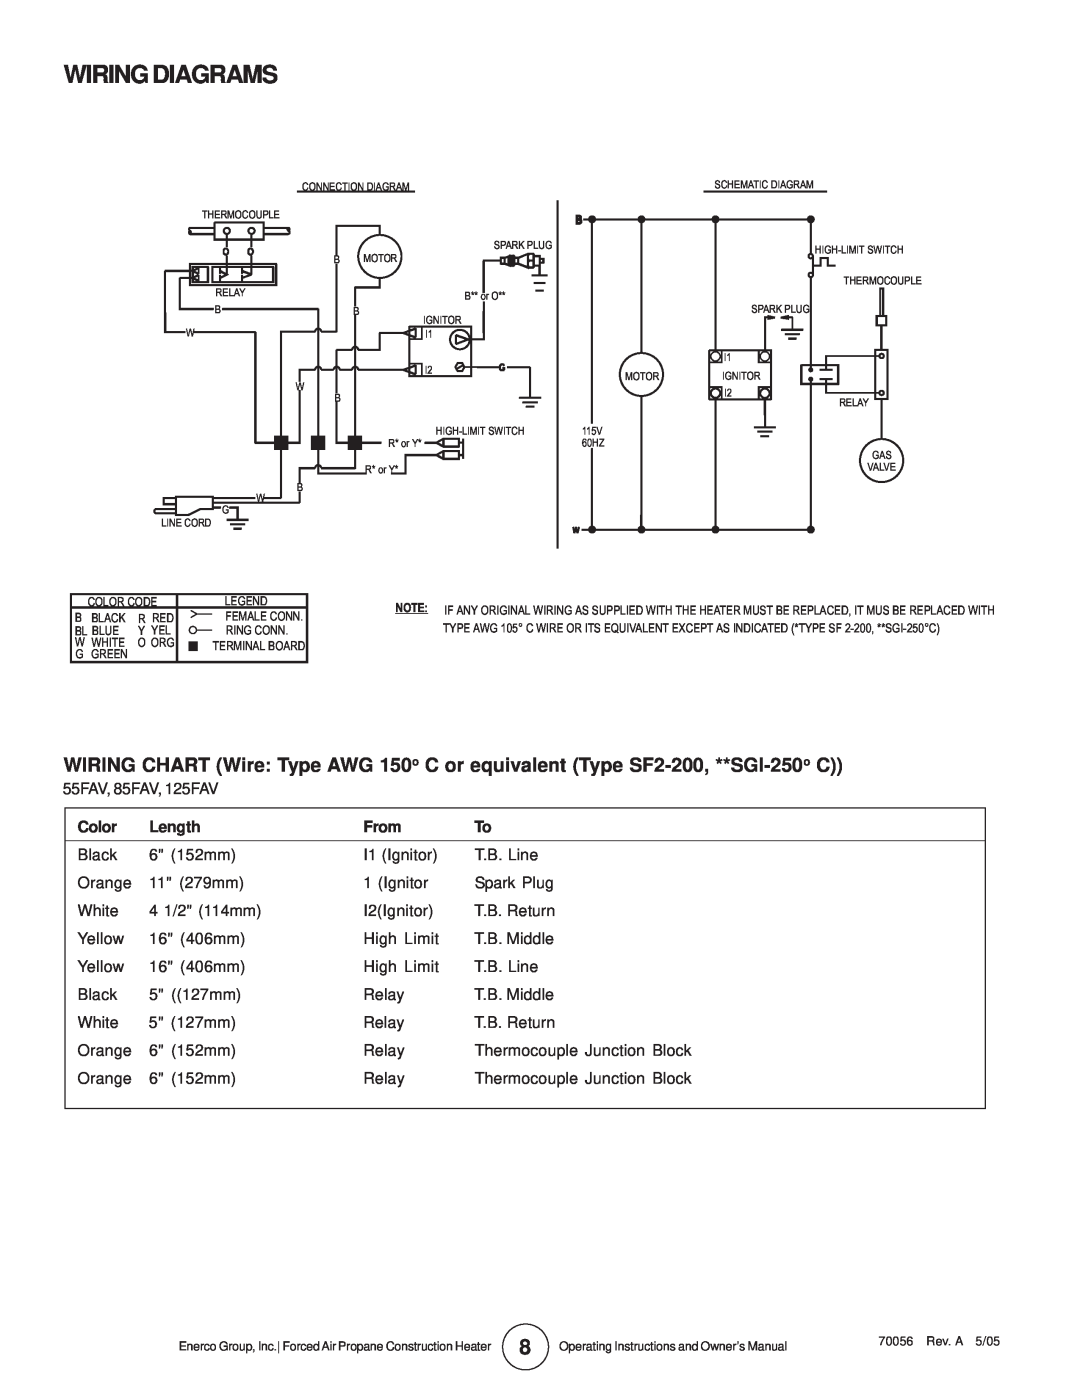 Enerco MH125FAV, MH85FAV, MH55FAV, TS55FAV, TS125FAV, HS85FAV, HS55FAV, HS125FAV owner manual Wiring Diagrams, Color, Length, From 